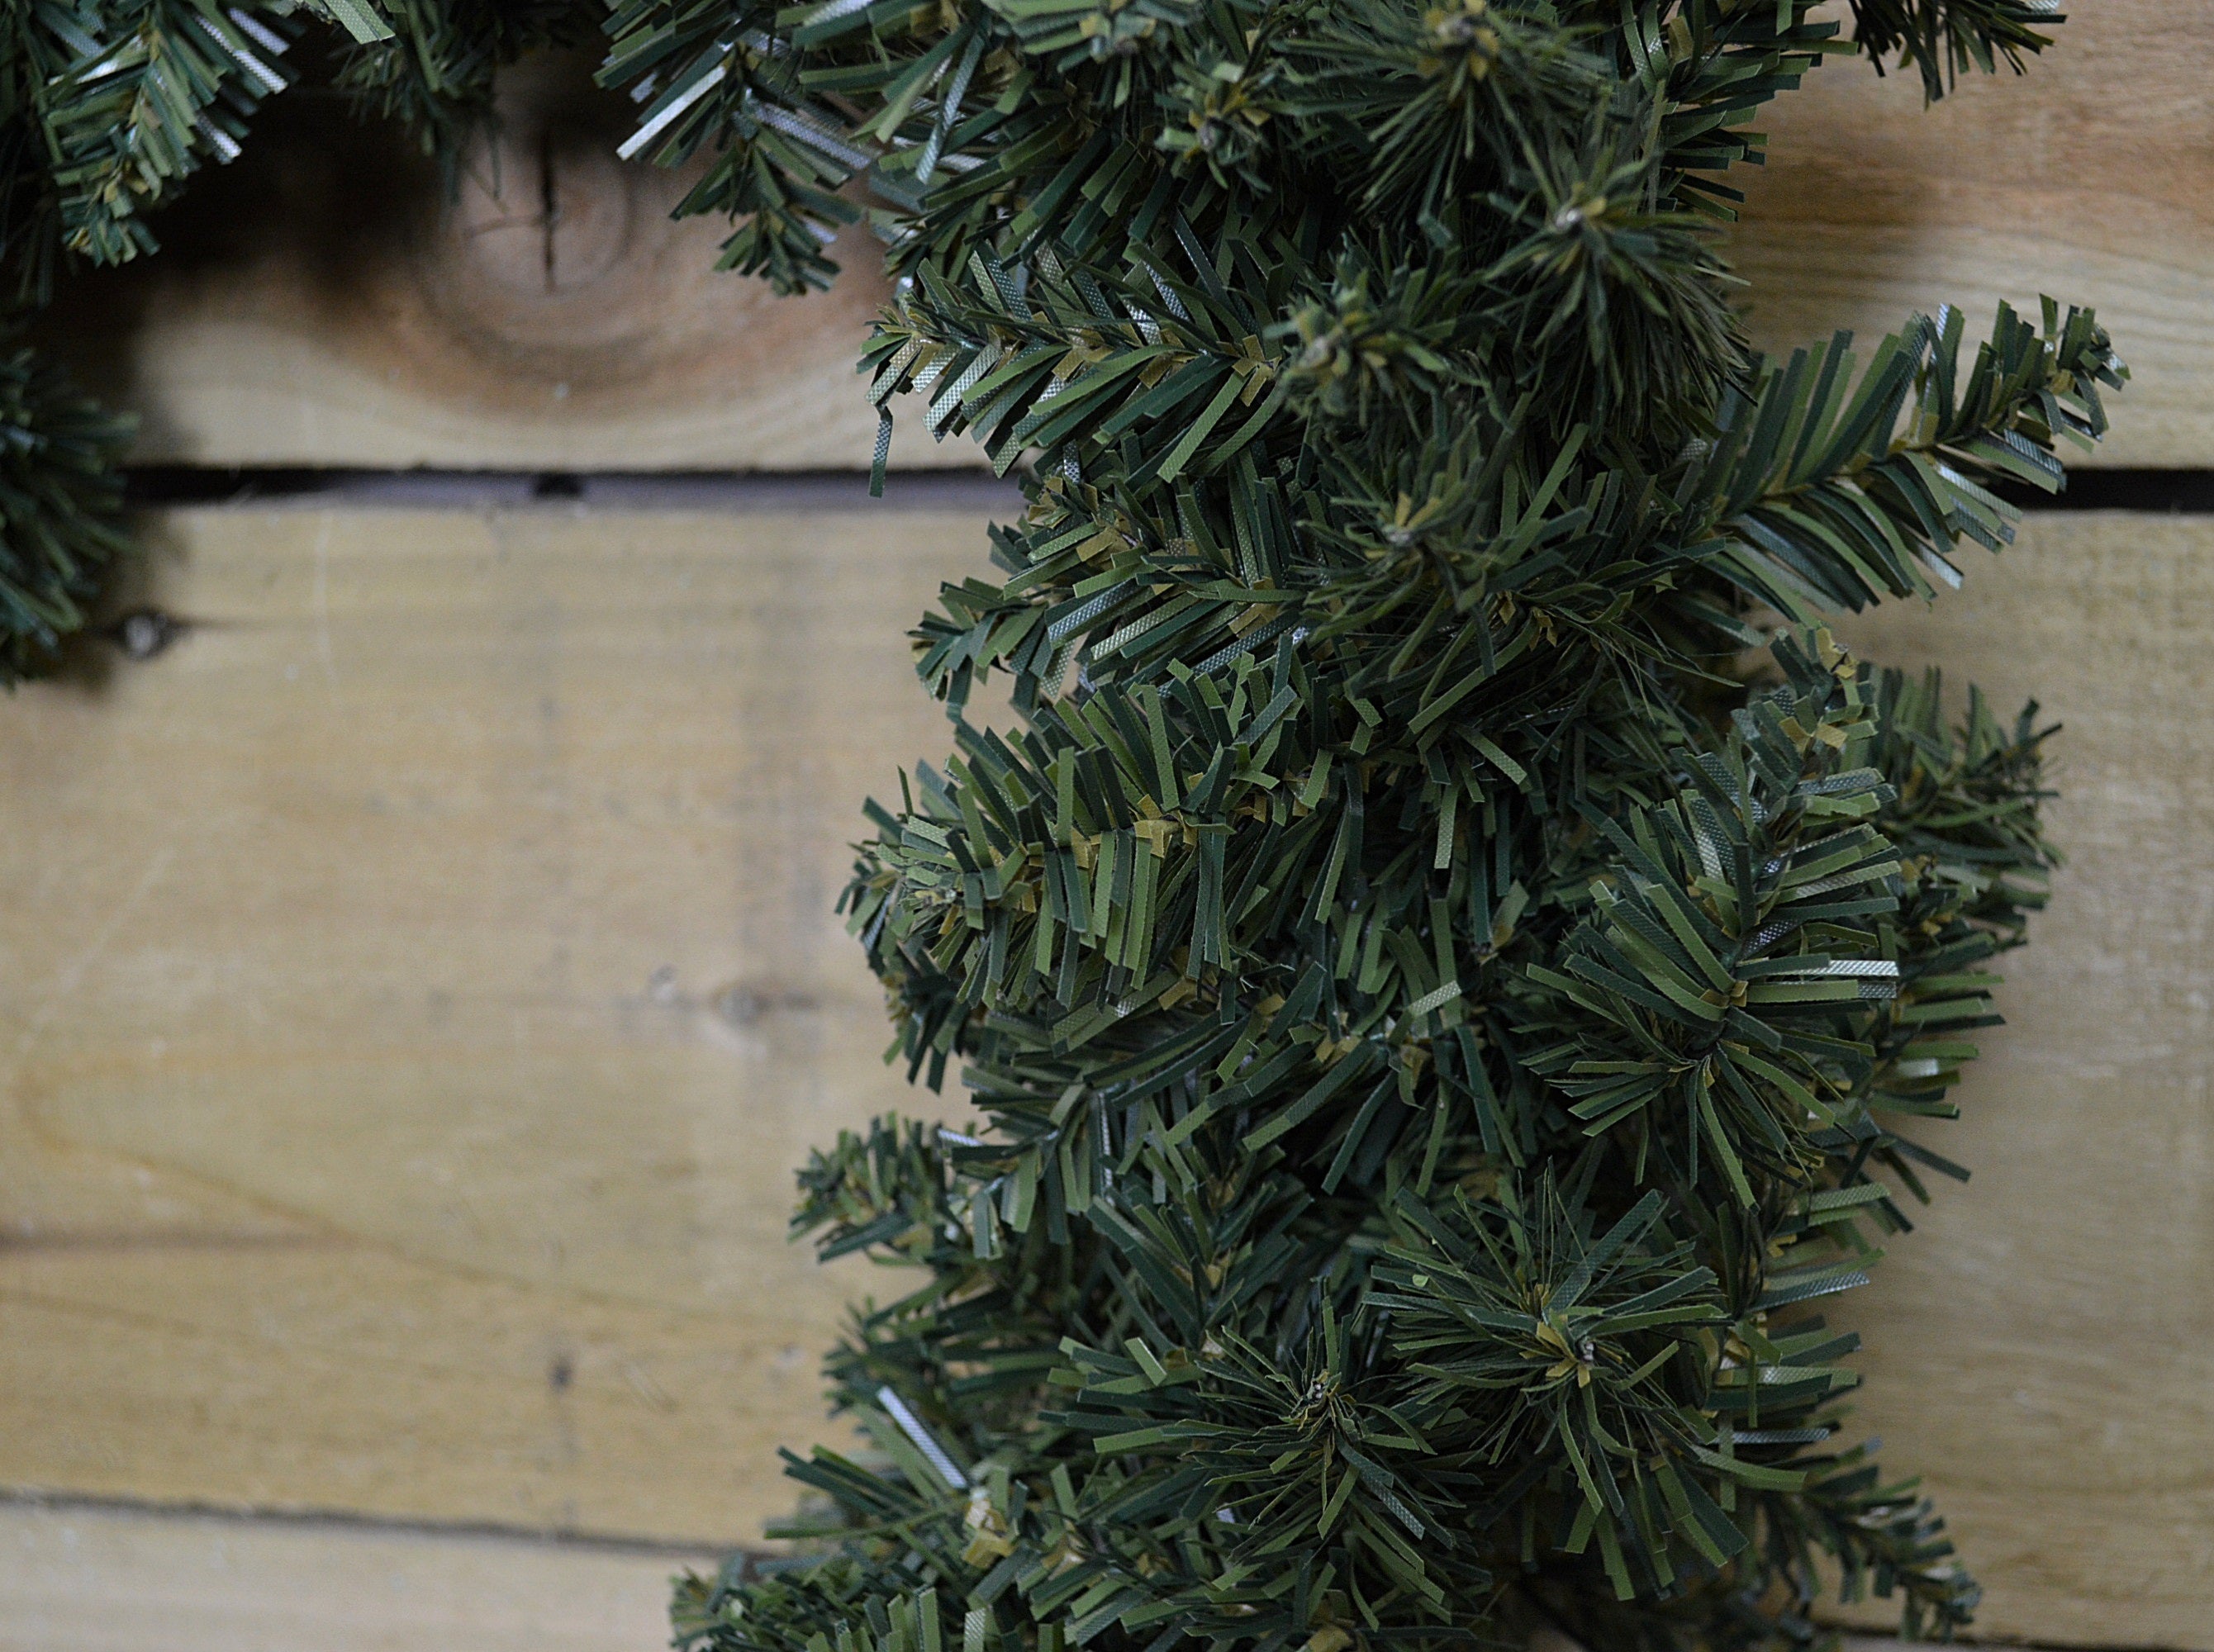 50cm x 55cm Luxury Heart Shaped Pine Christmas Door Wreath in Plain Green